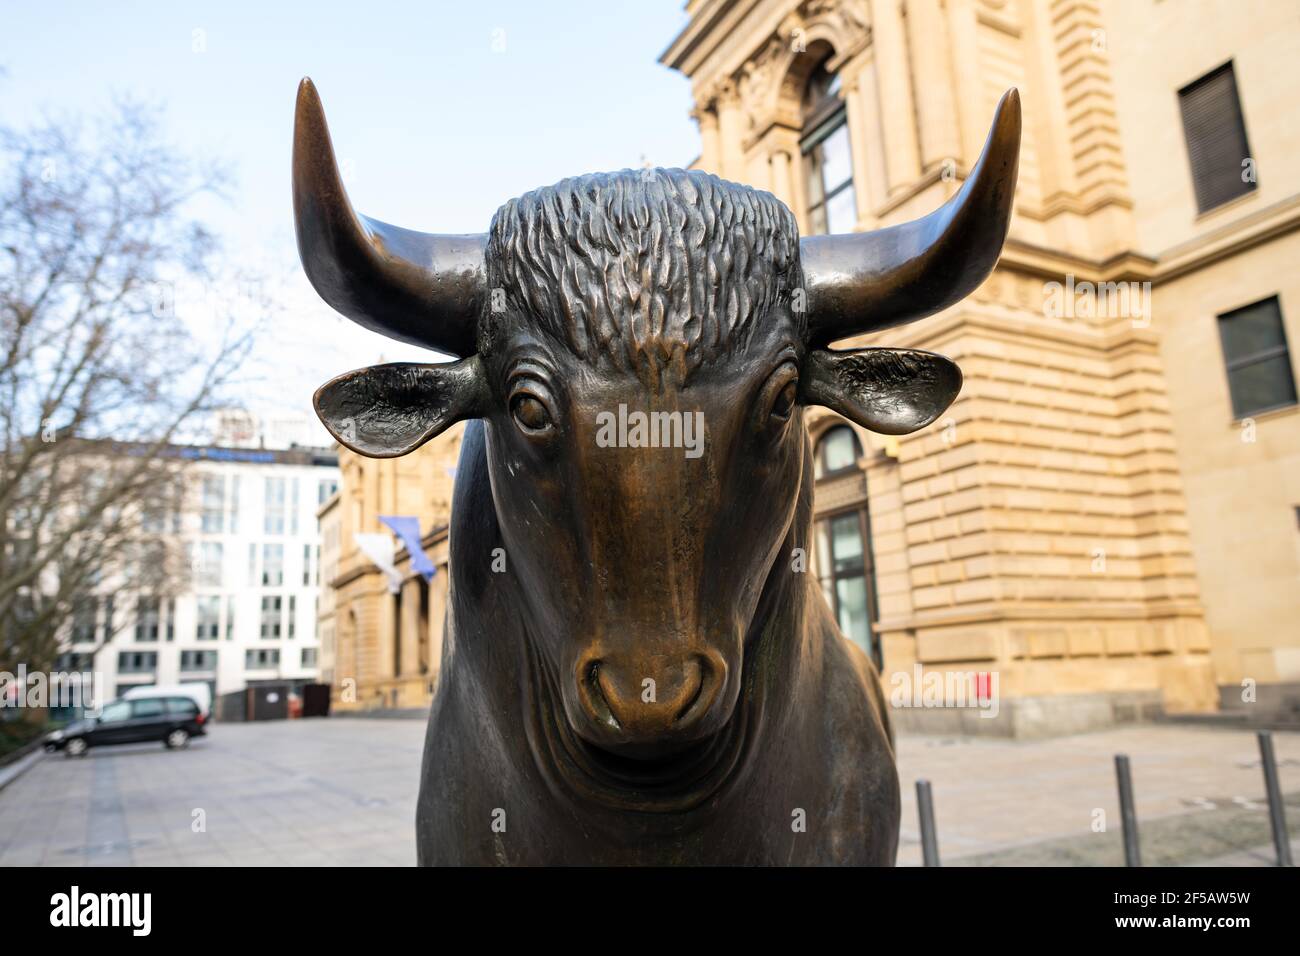 Bull market - bull statue outside Frankfurt stock exchange building, Frankfurt, Germany Stock Photo